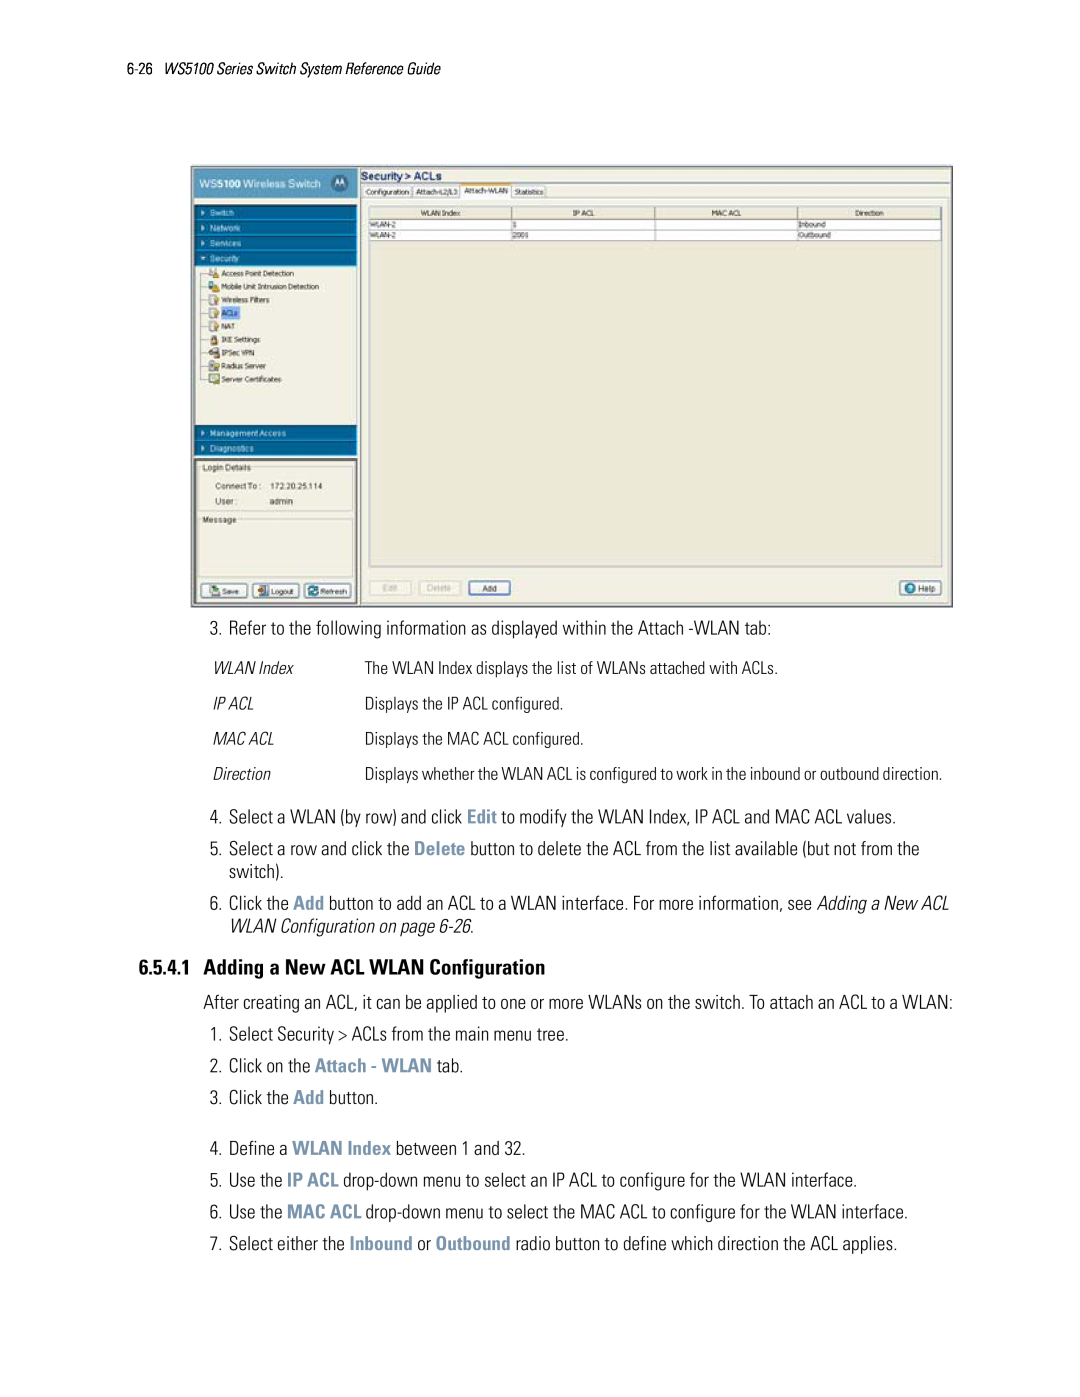 Motorola WS5100 manual 6.5.4.1Adding a New ACL WLAN Configuration 